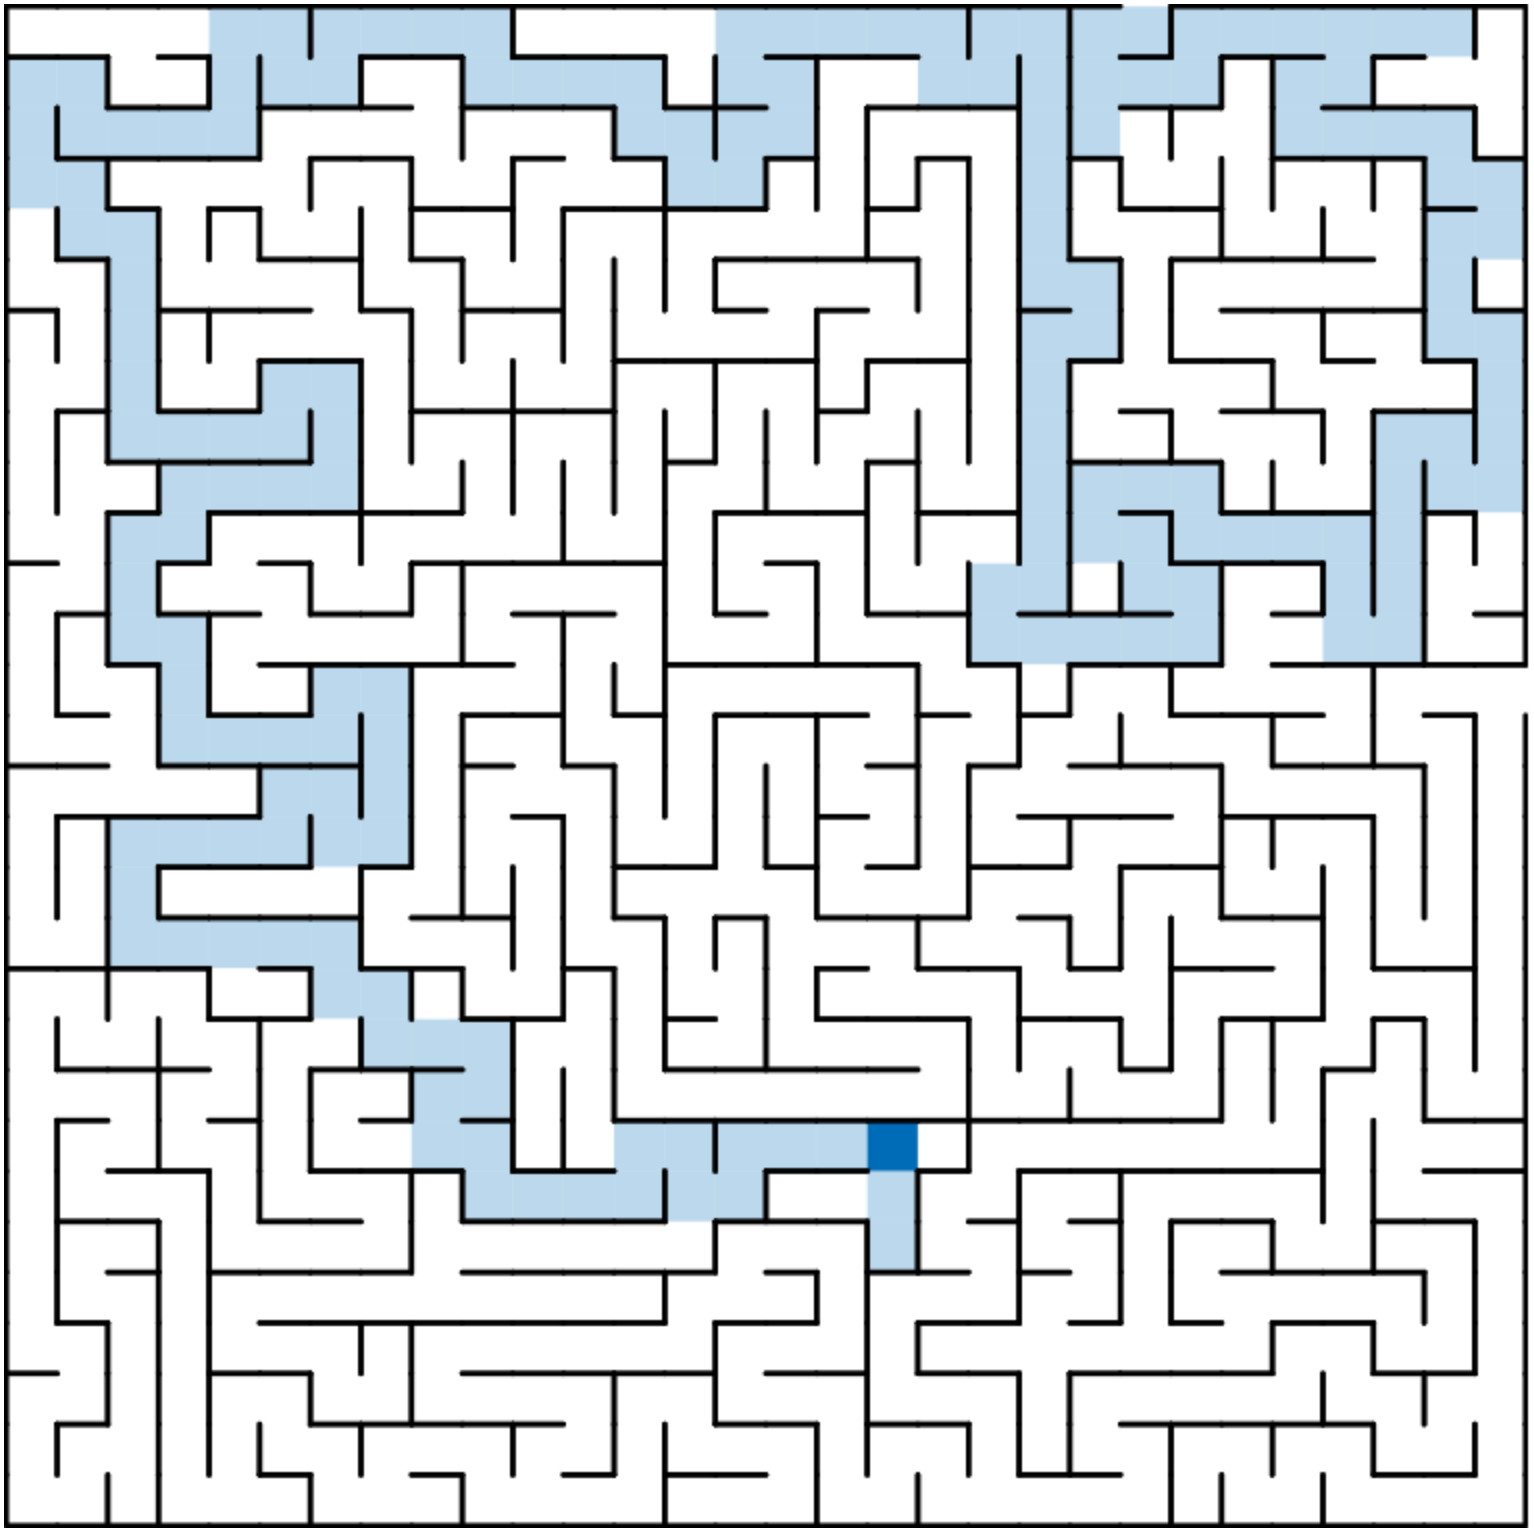 Maze game in progress